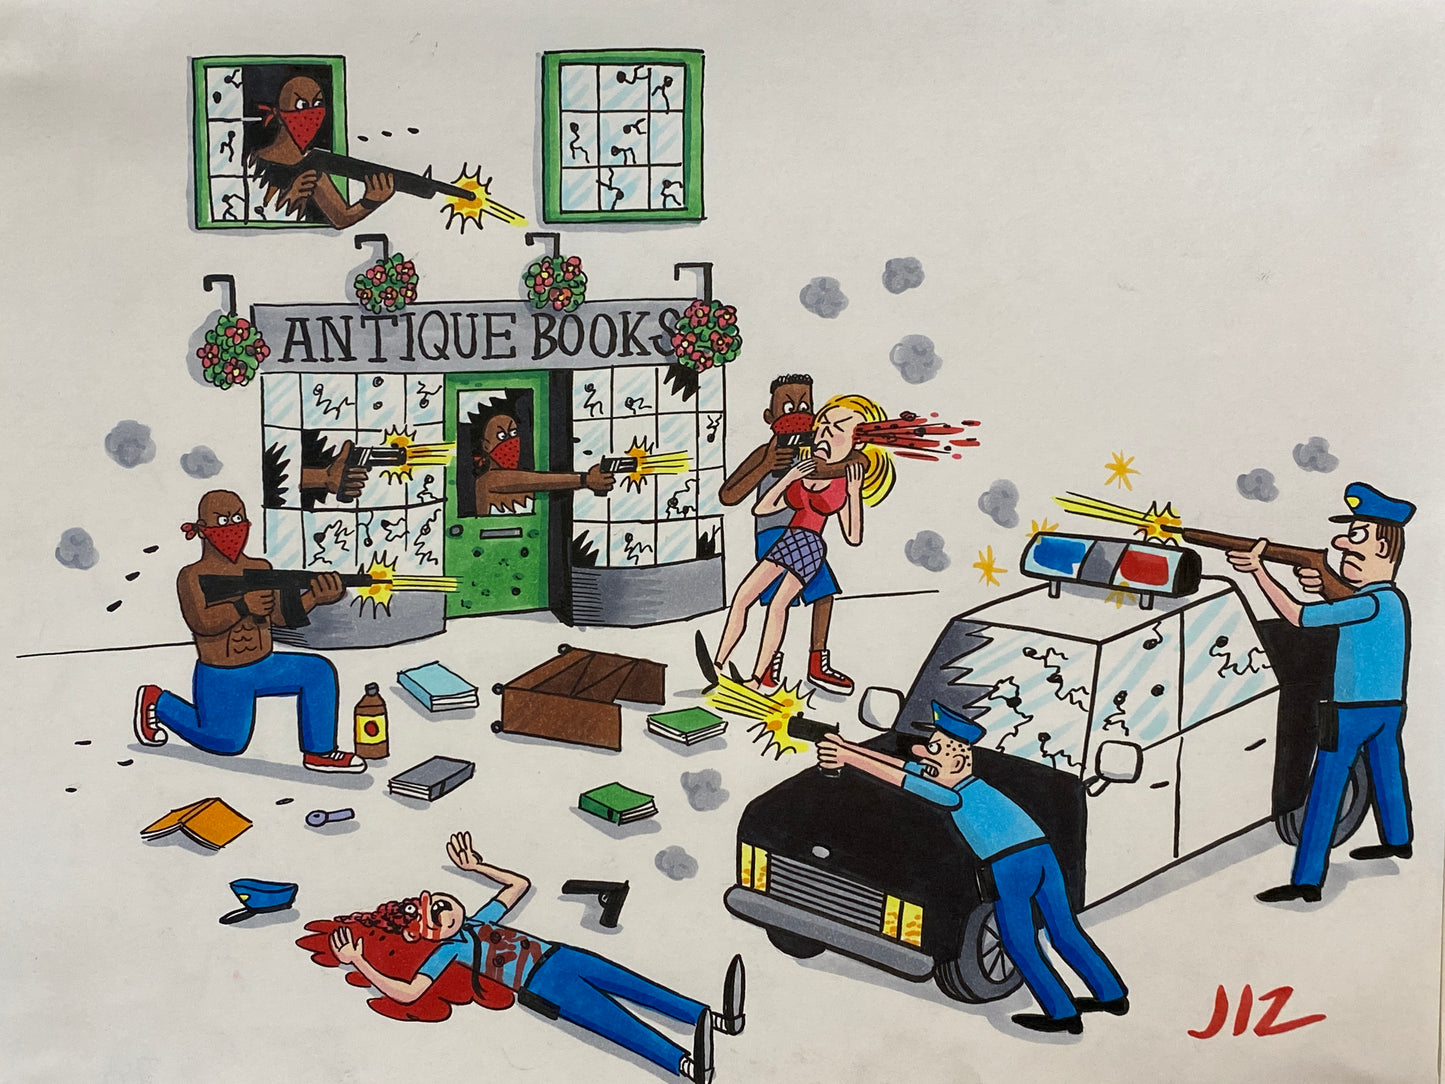 Johnny Ryan - Cartoons on Paper (Row 1 - 11 Artworks)